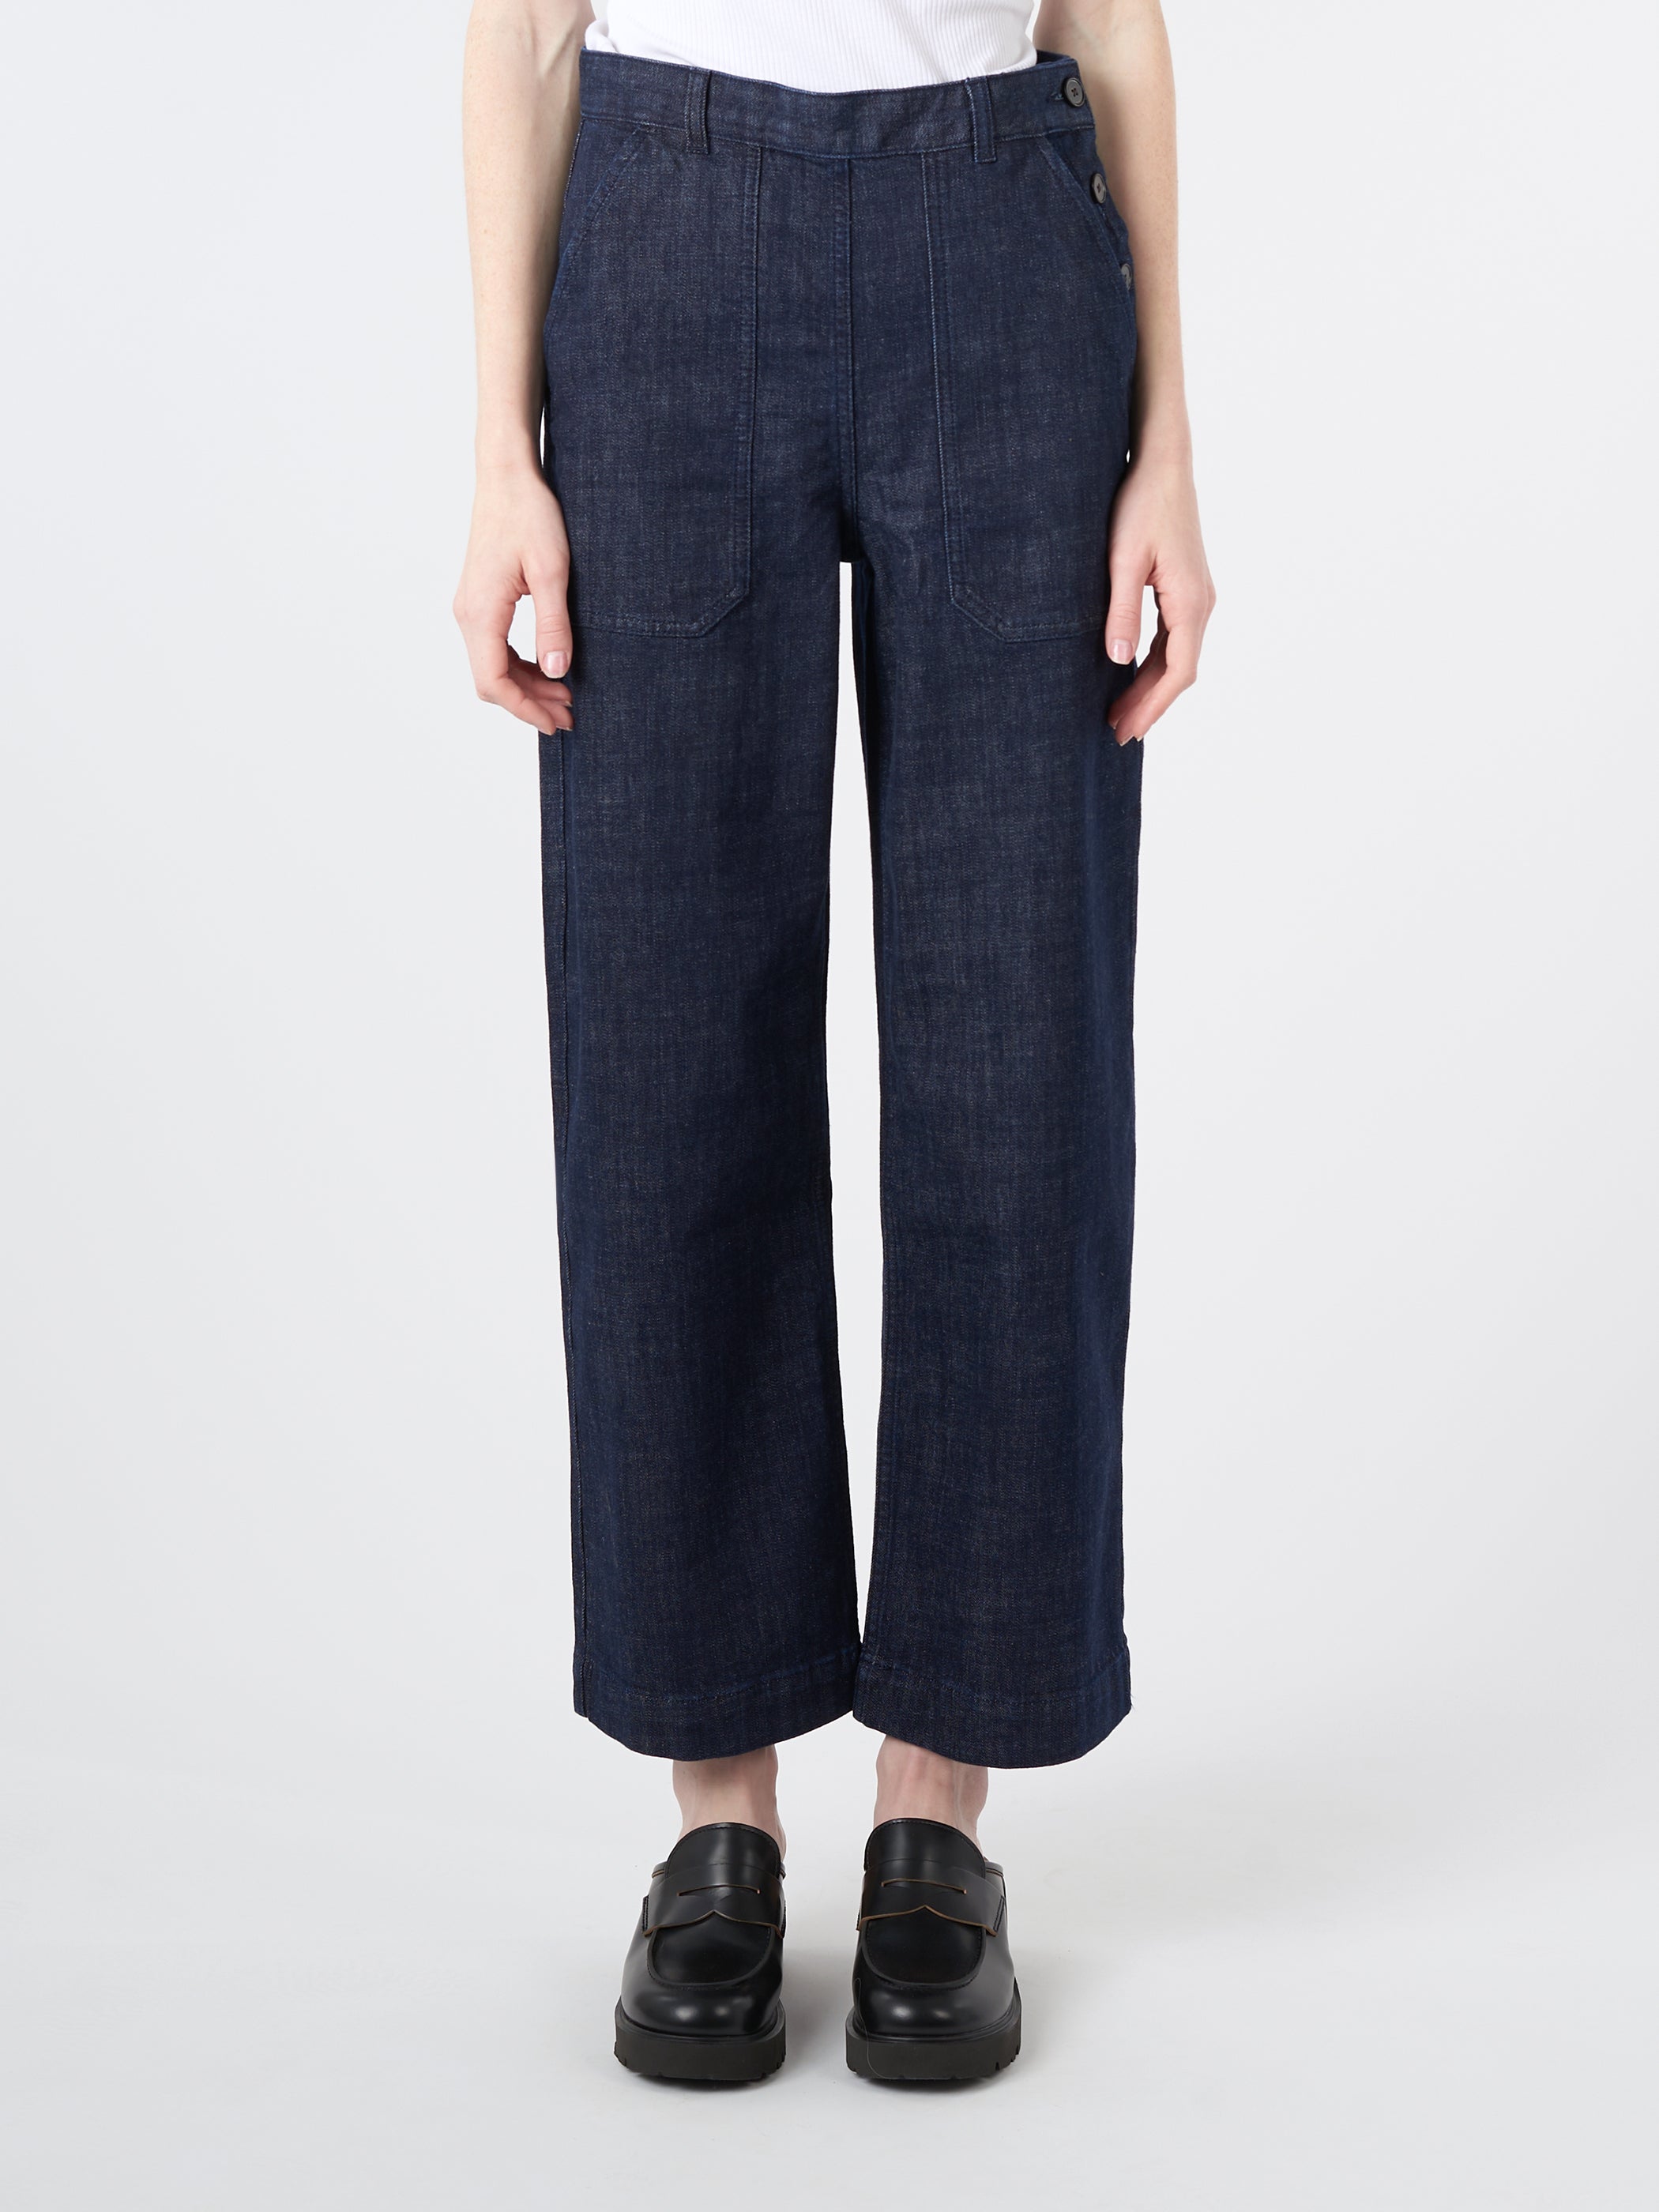 Annie Full Length Jeans